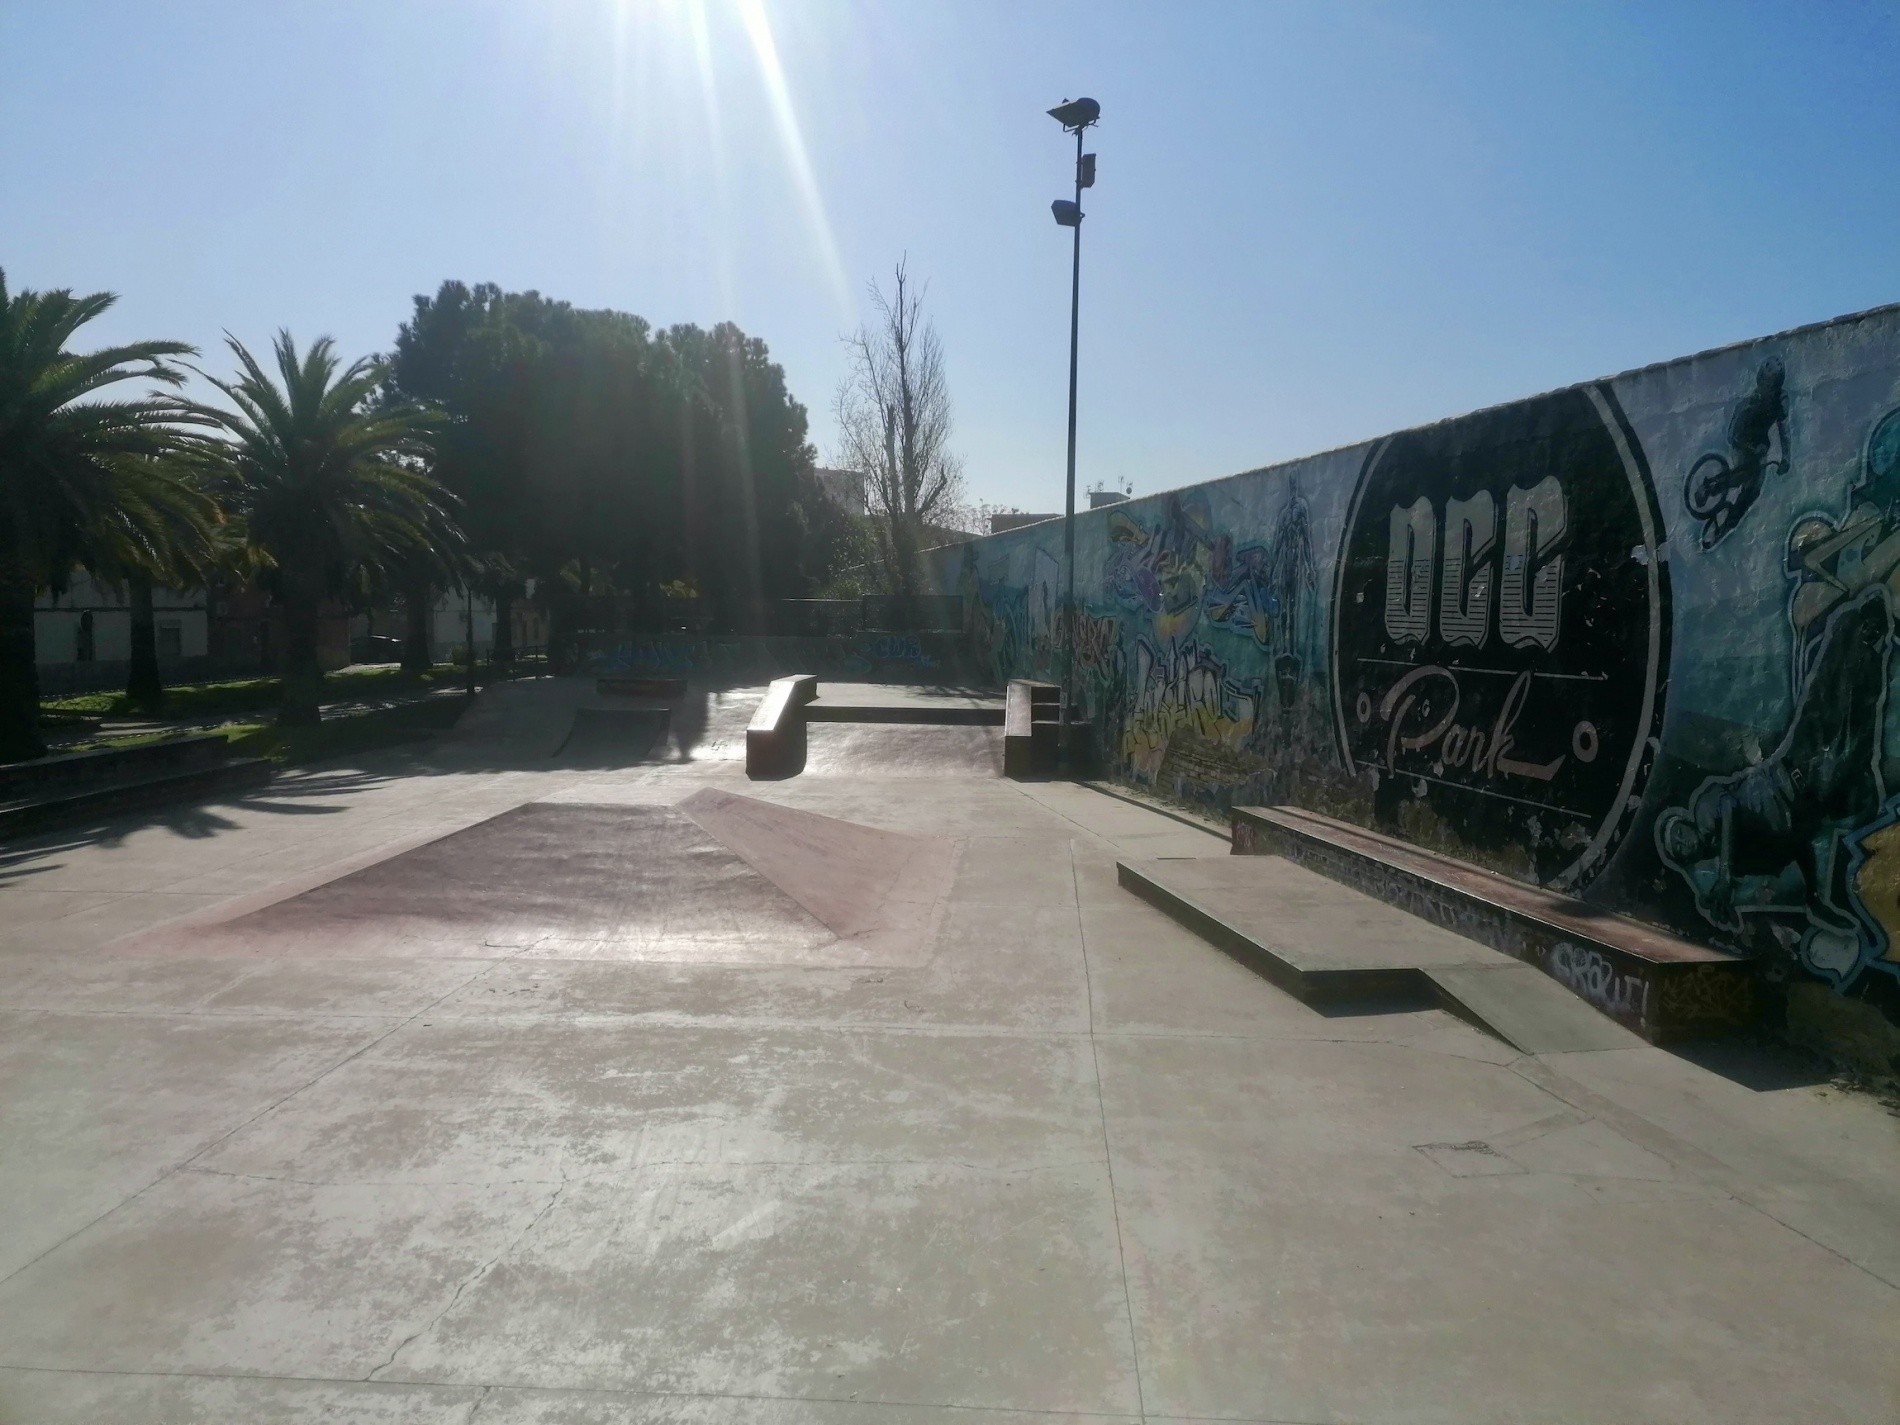 Cañero skatepark